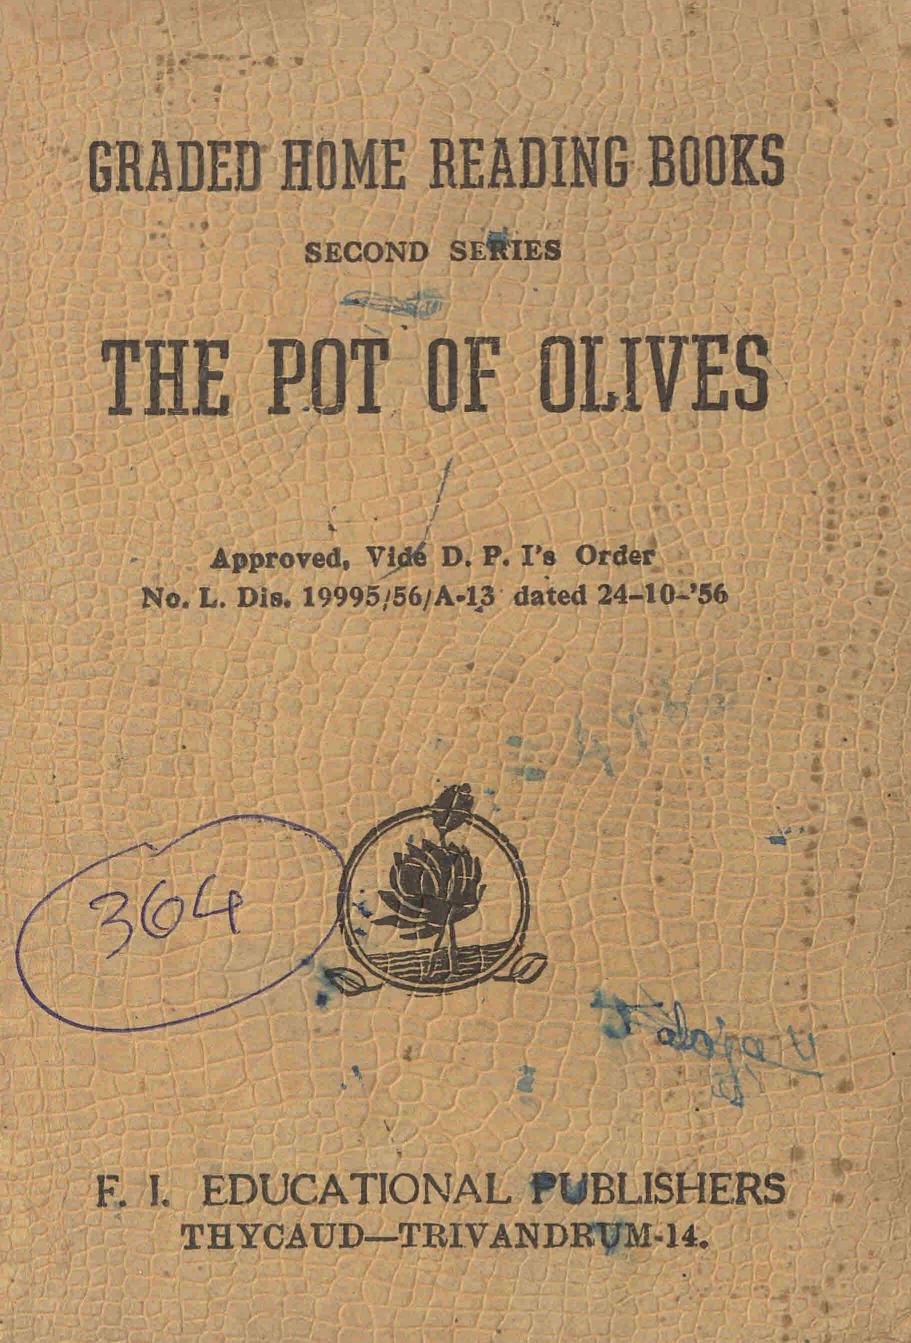  1963 The Pot of Olives - A. Sankara Pillai